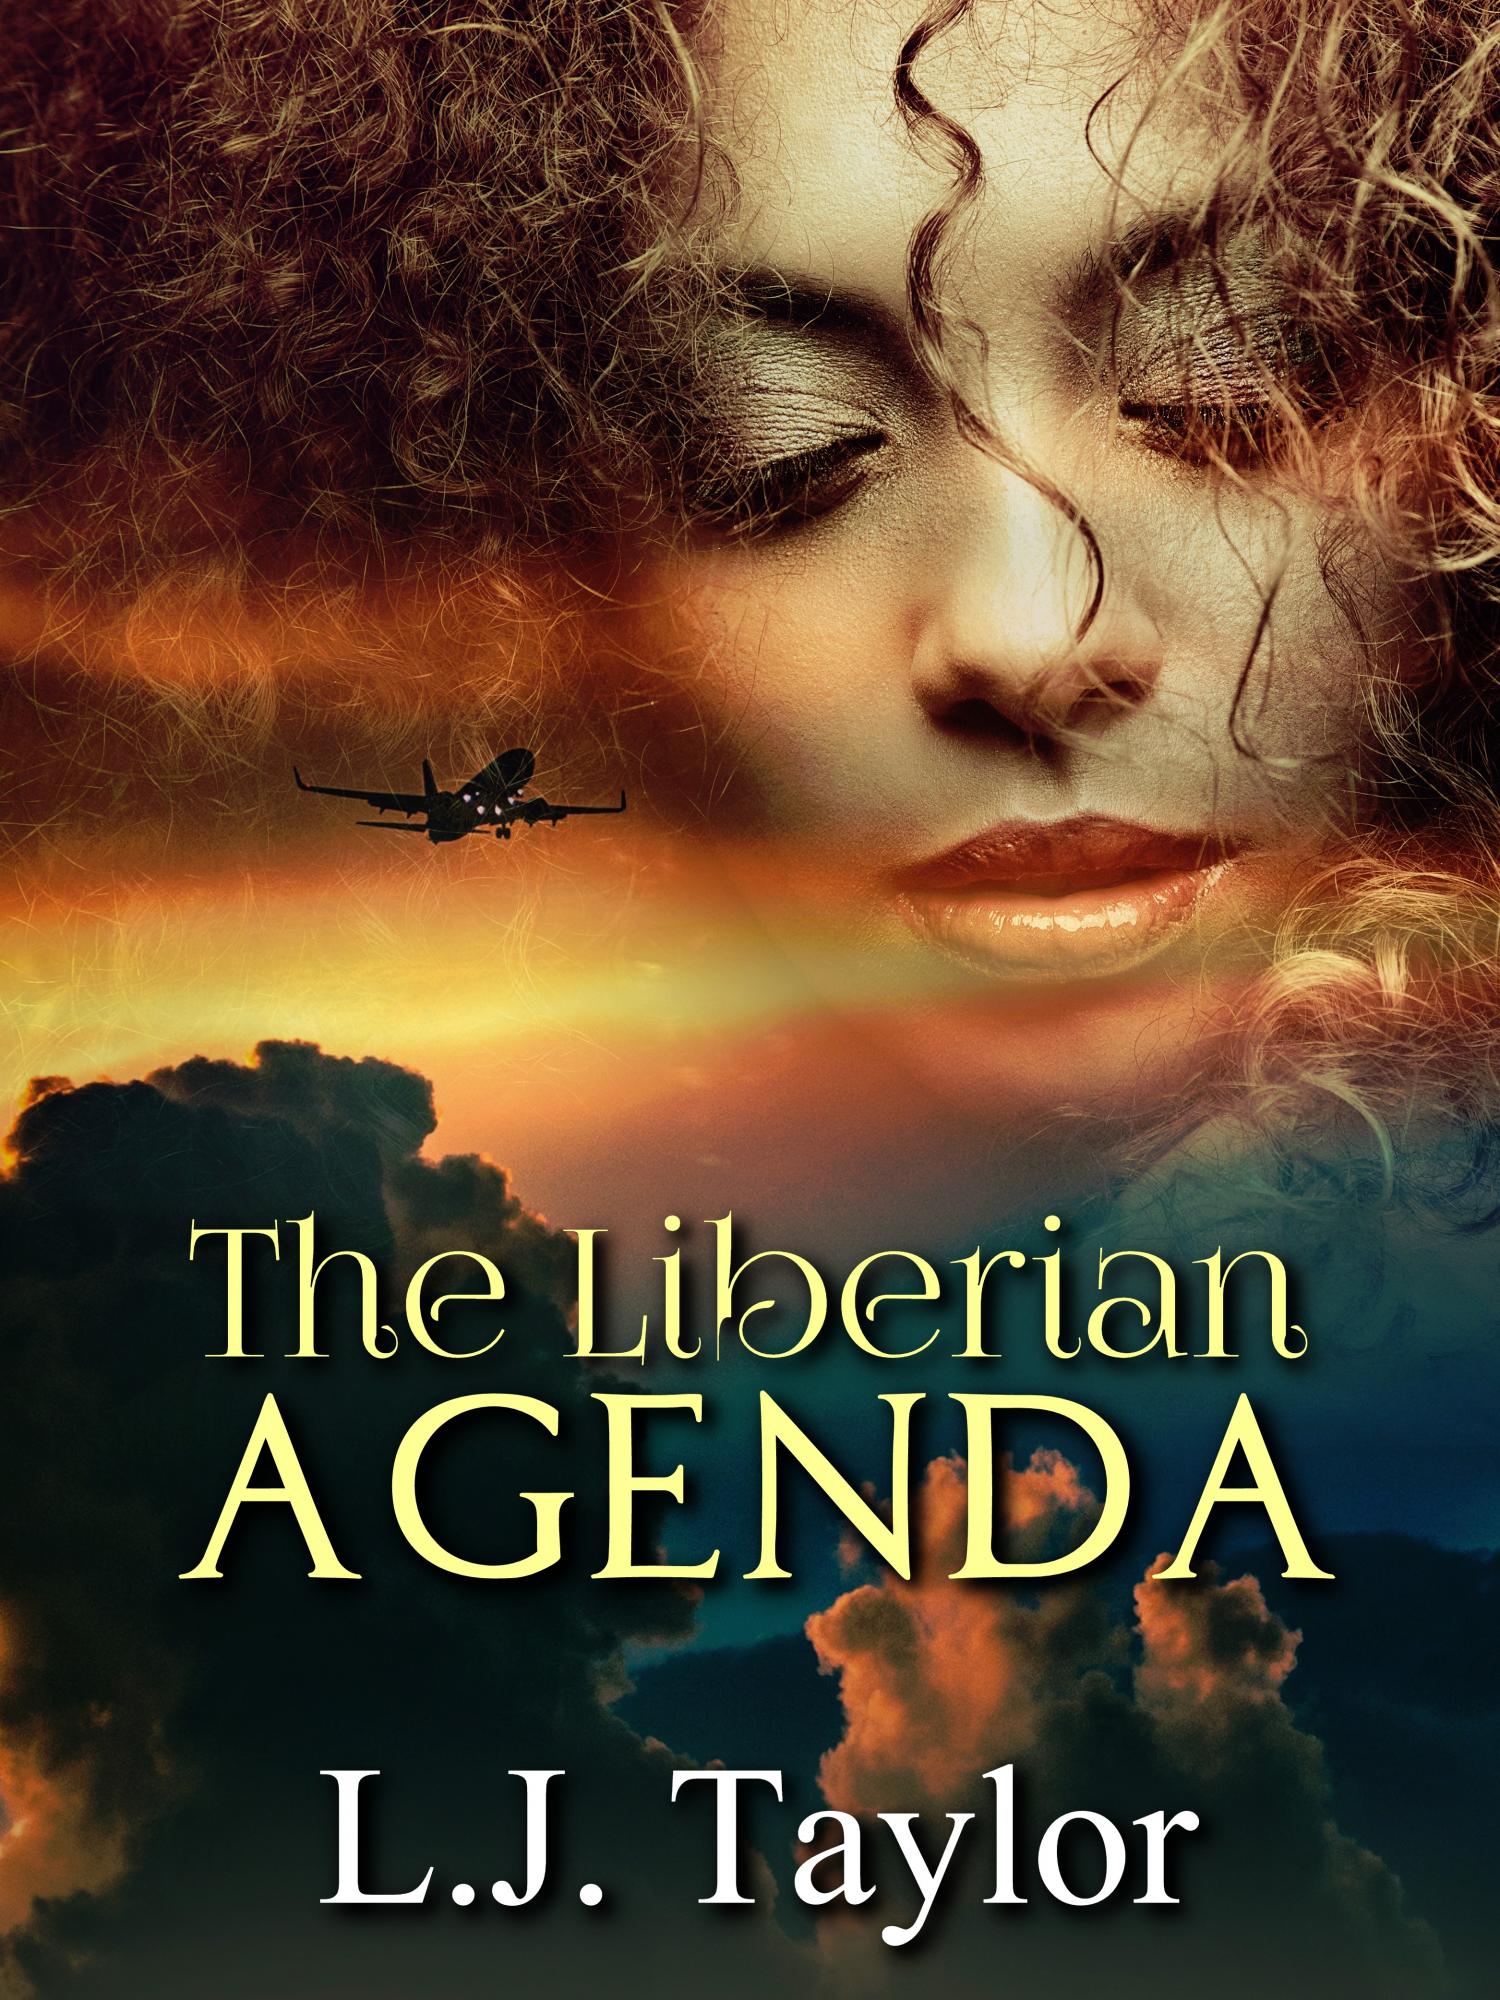 FREE: The Liberian Agenda by L.J. Taylor